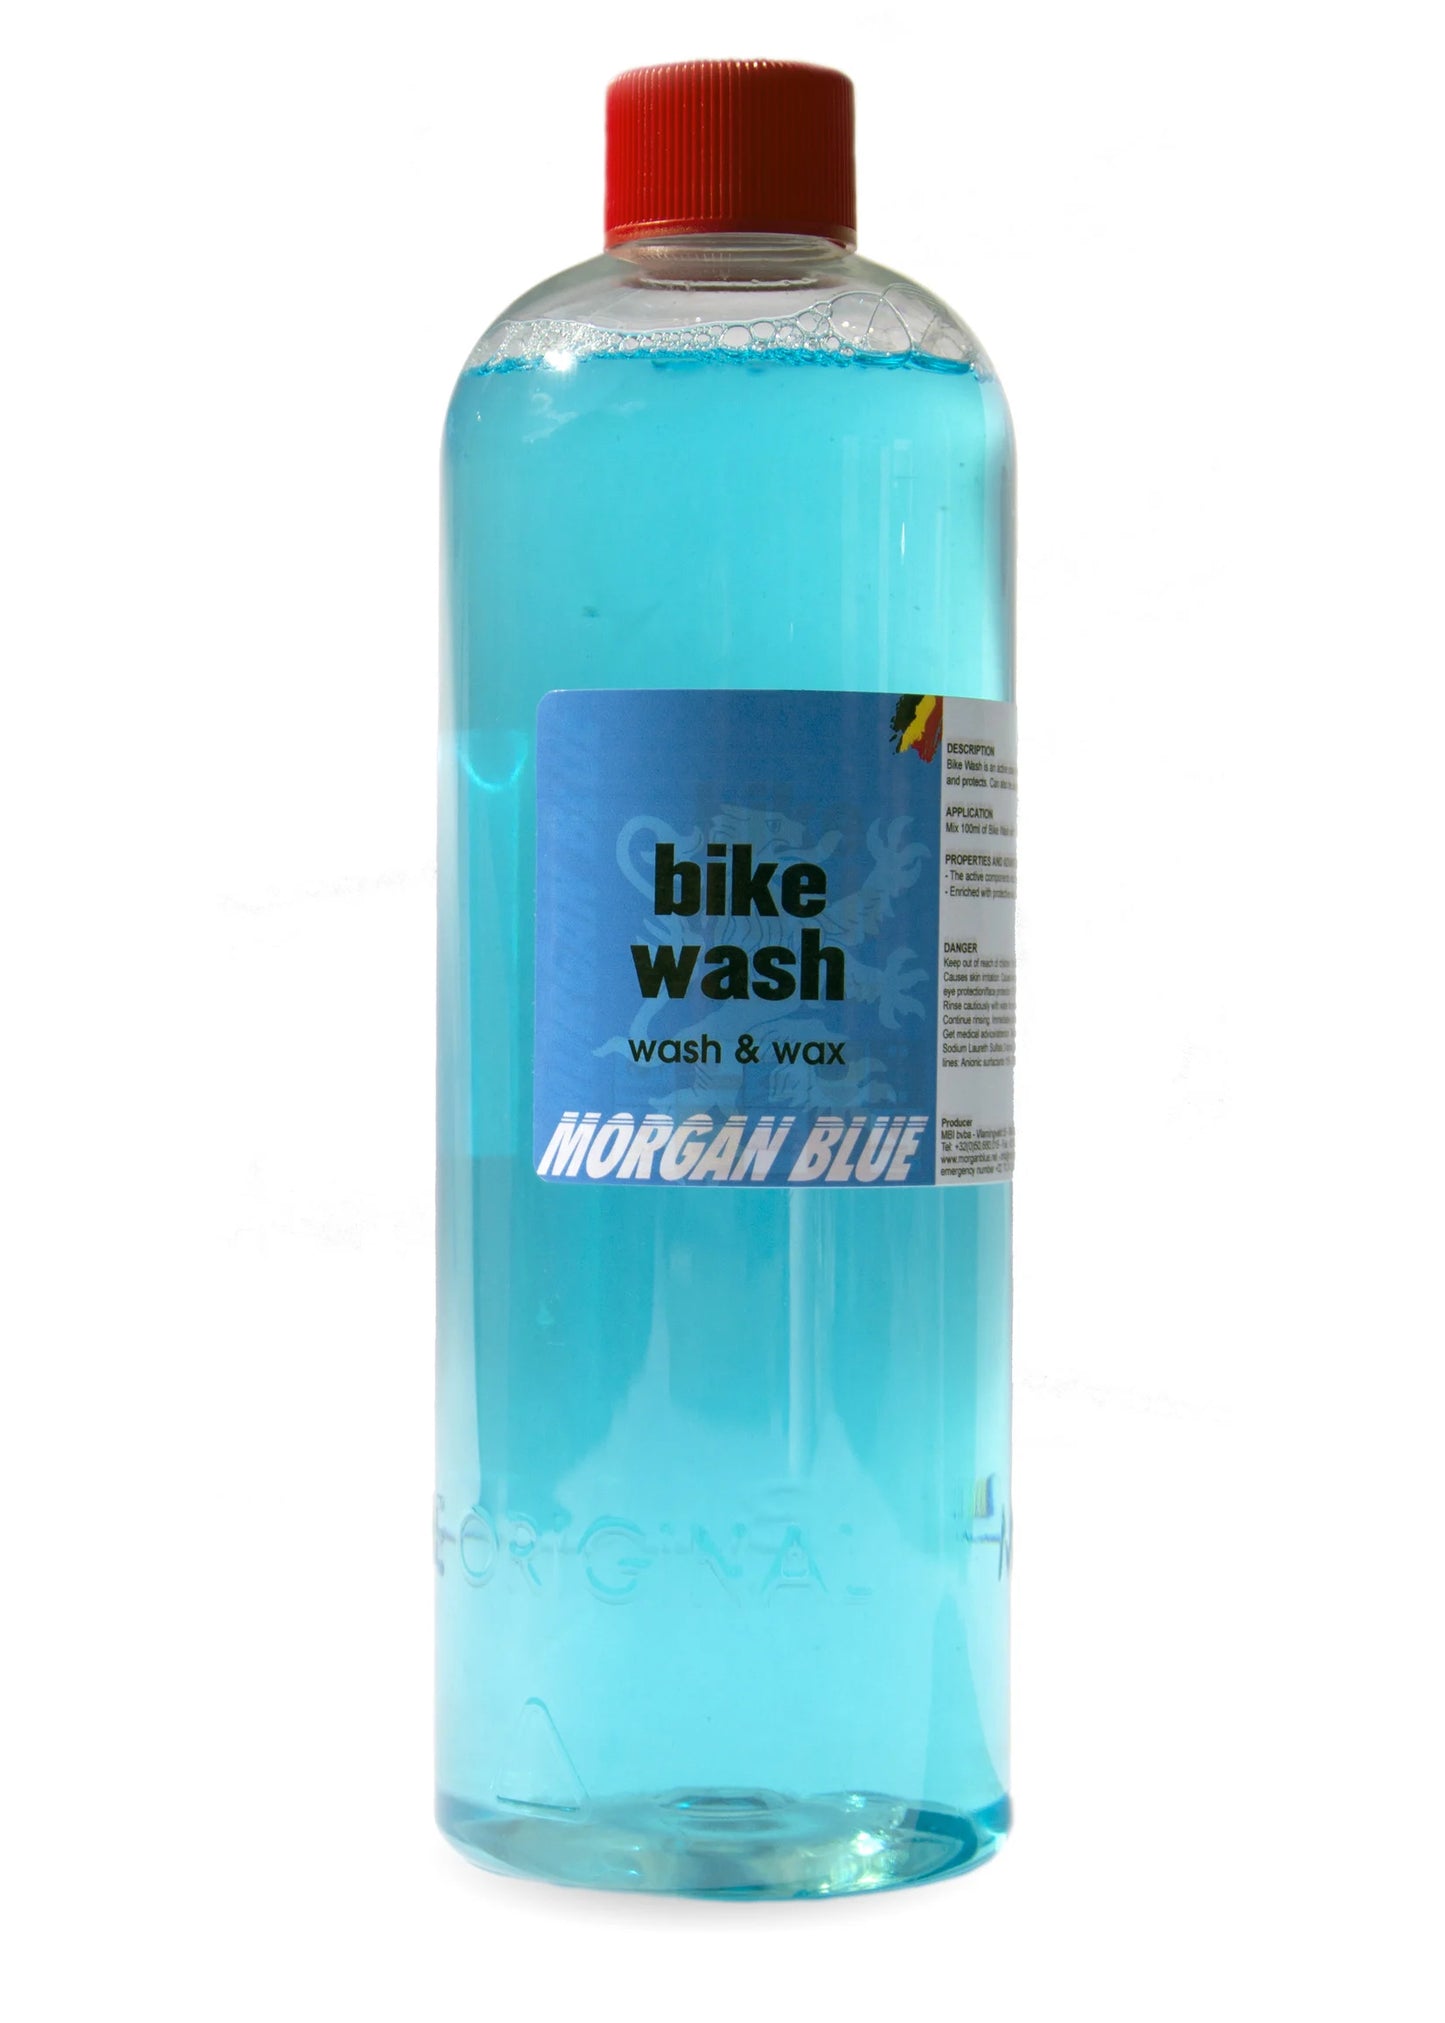 Morgan Blue Bike Wash 1 liter